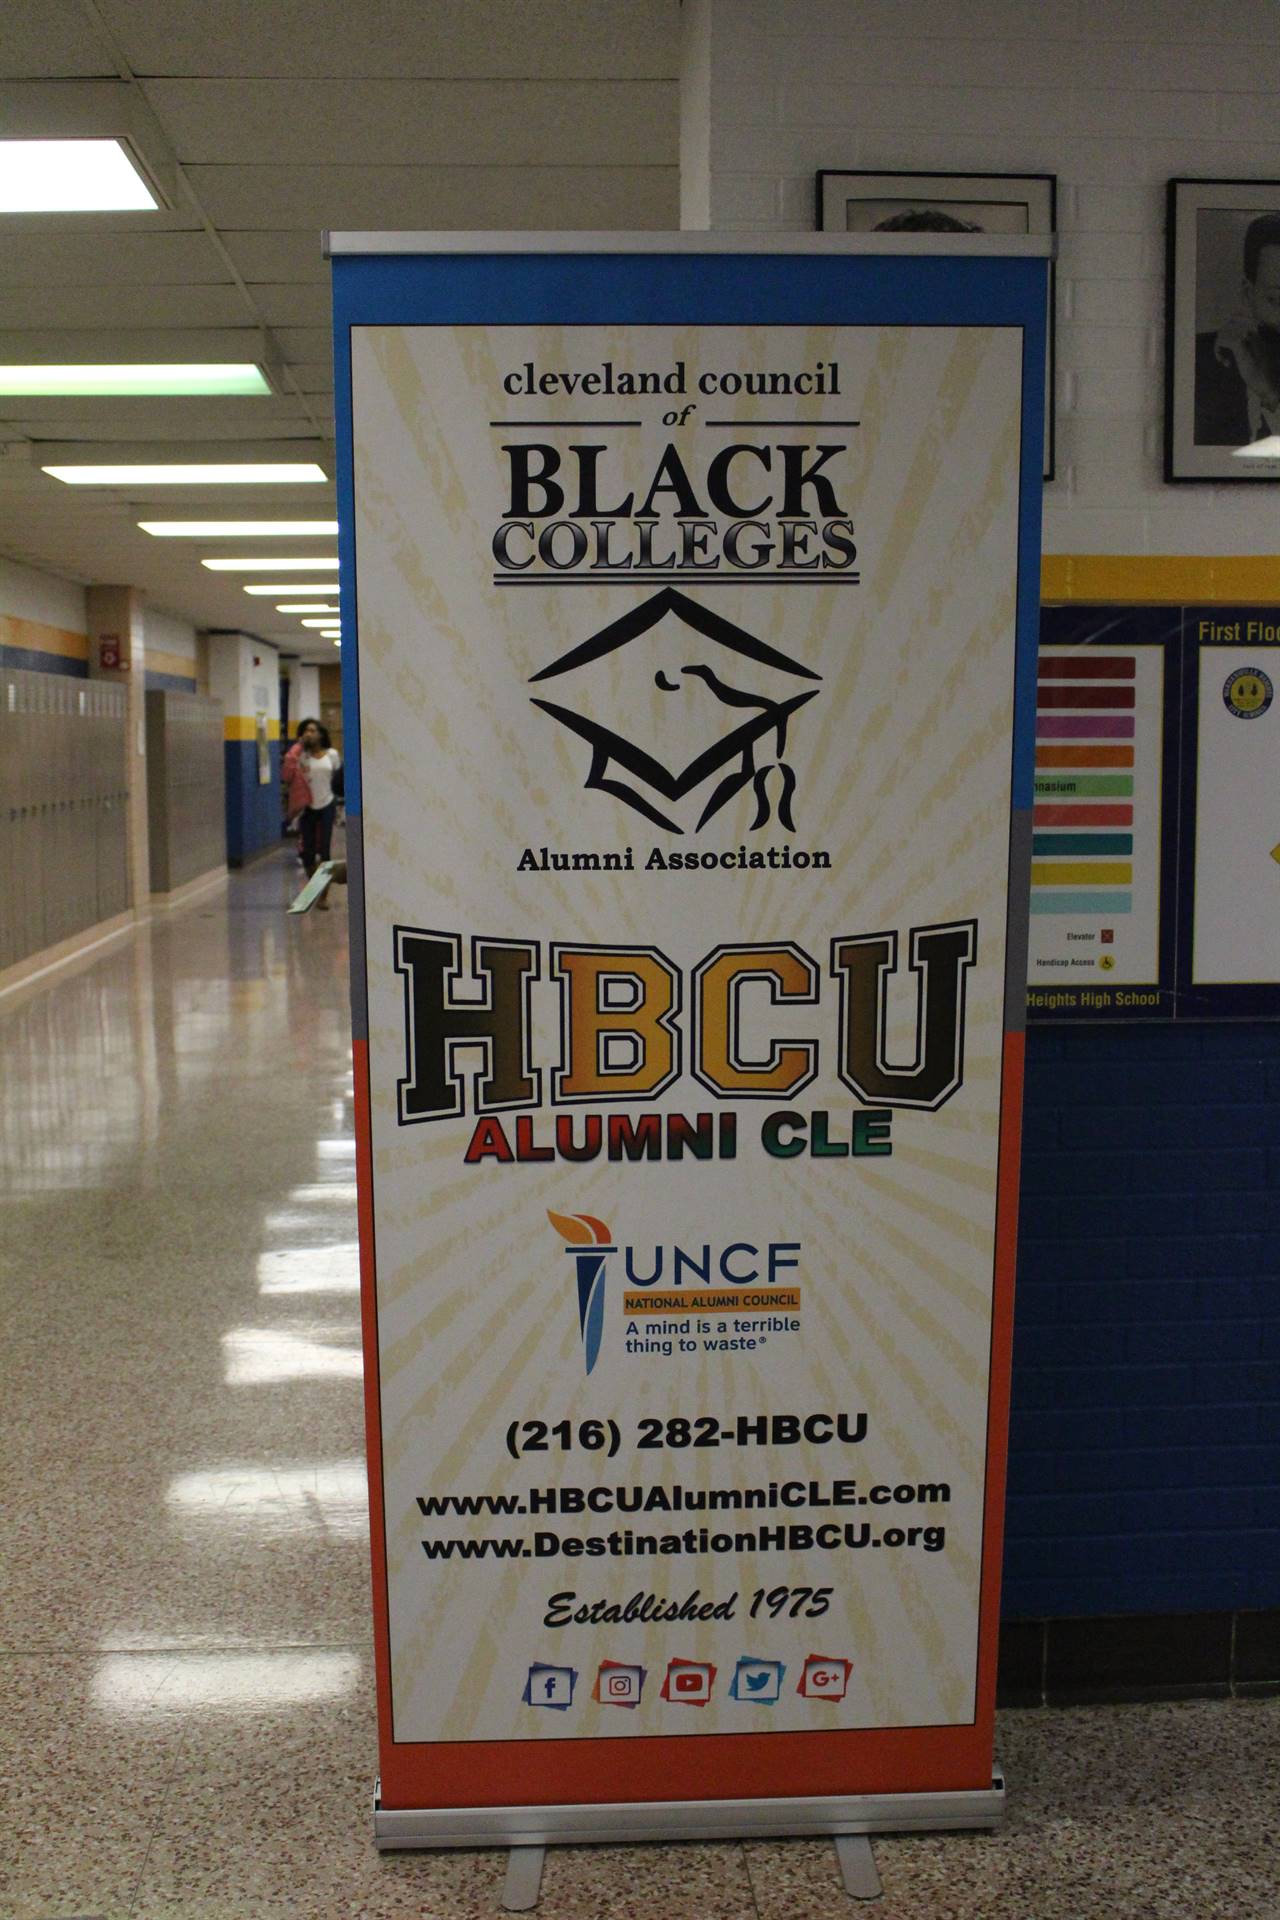 HBCU College Fair